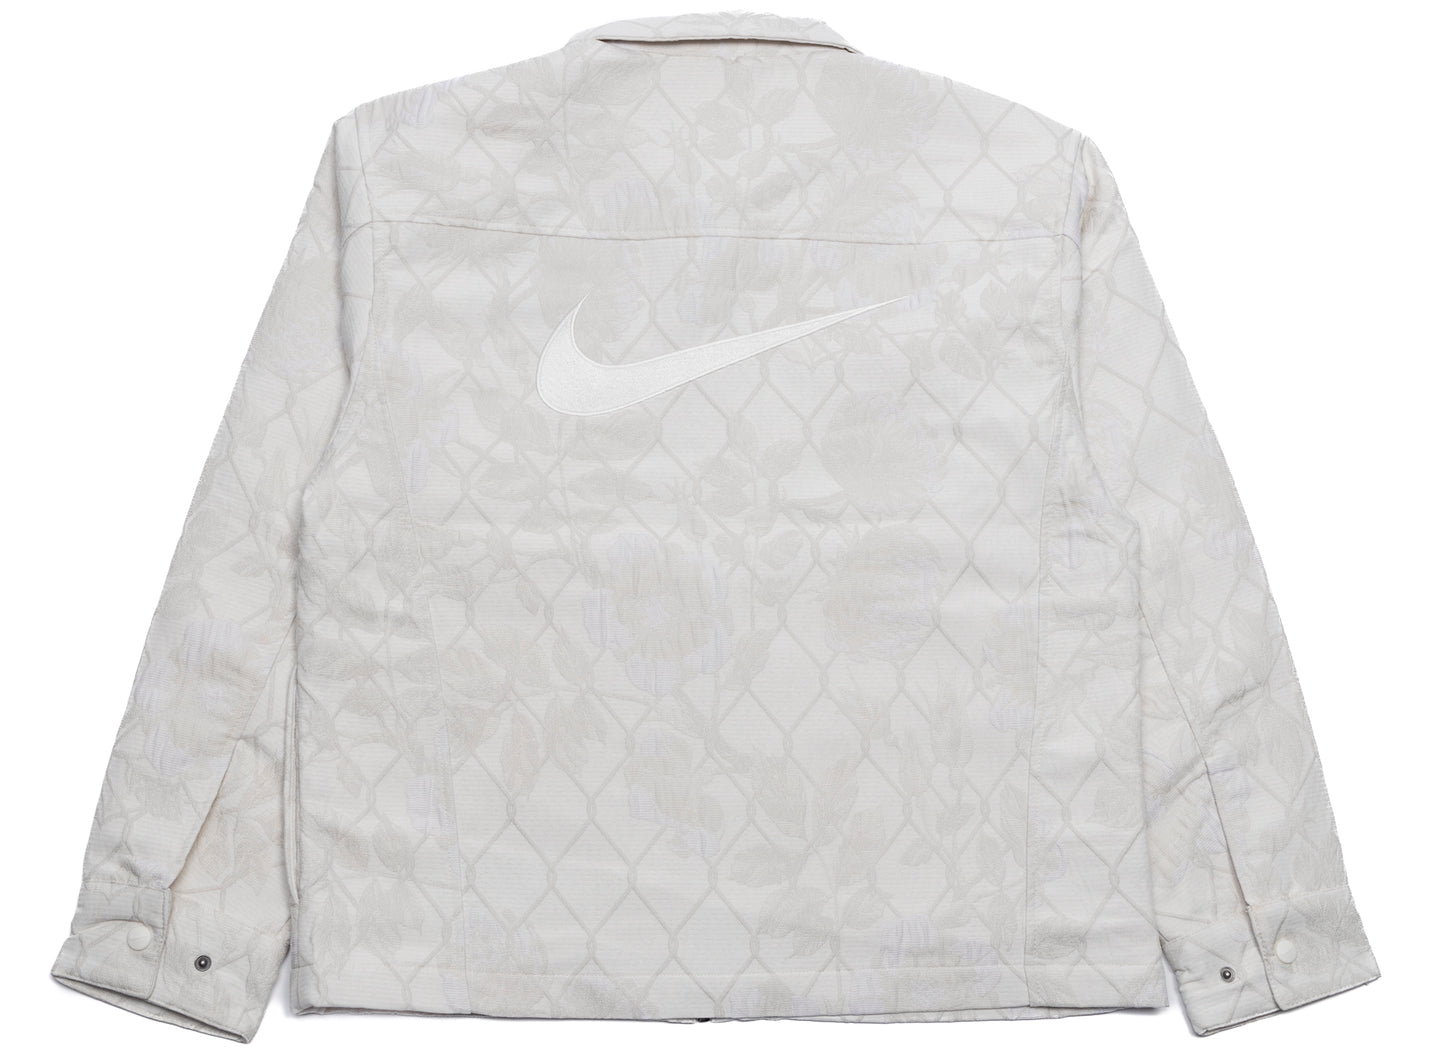 Nike Devin Booker Repel Basketball Jacket